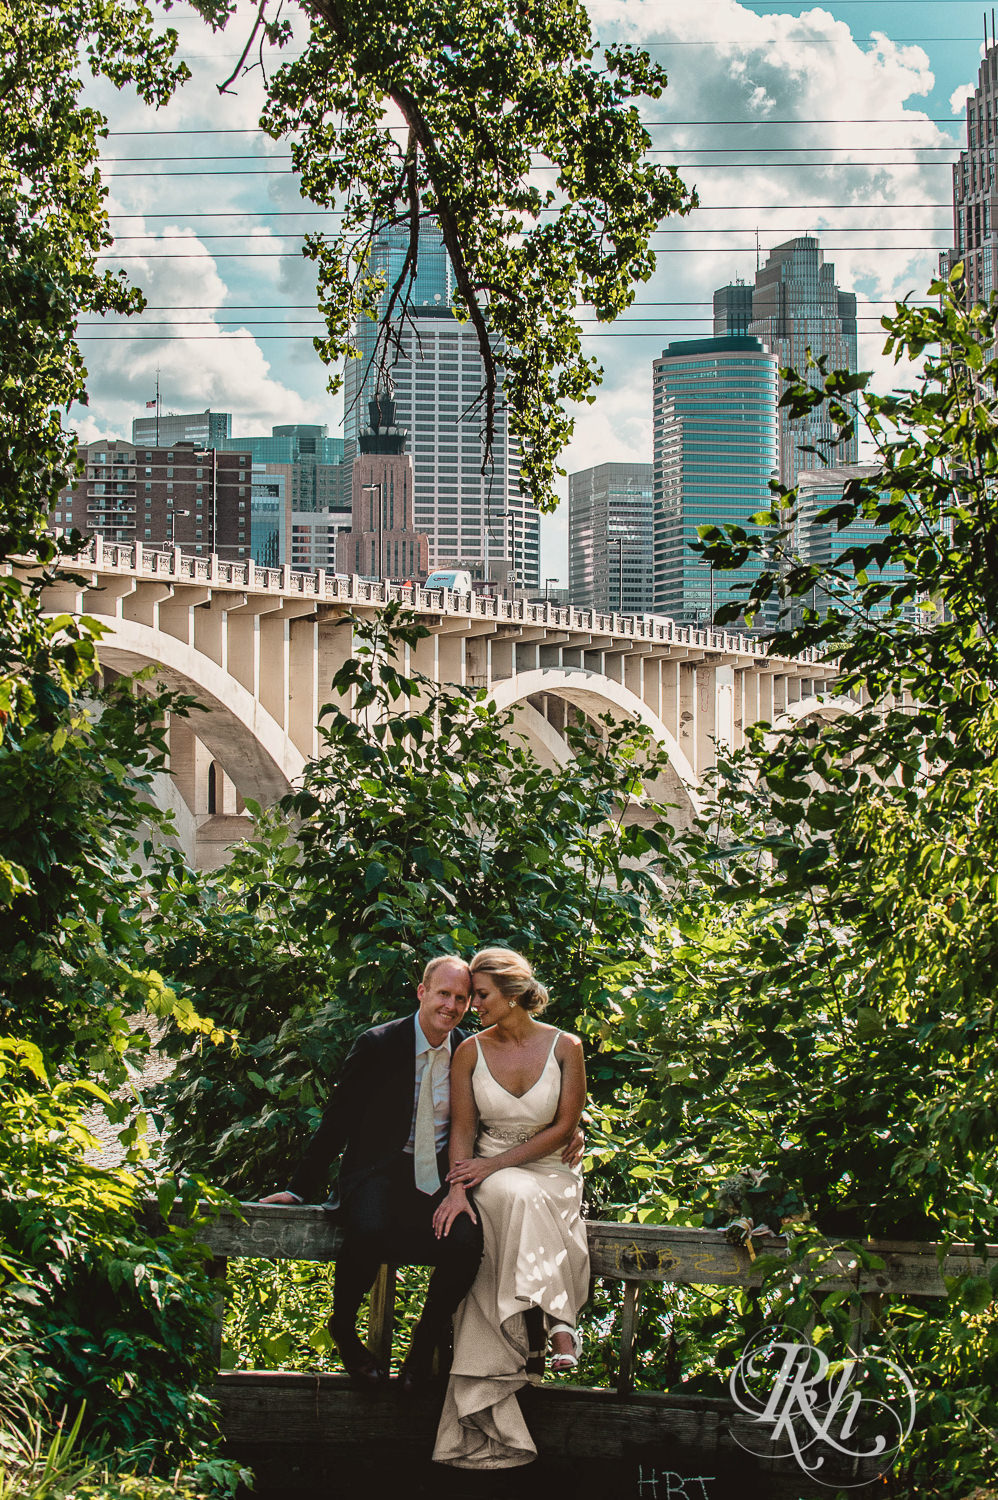 Bride and groom kiss under a bridge on their wedding day in Minneapolis, Minnesota.